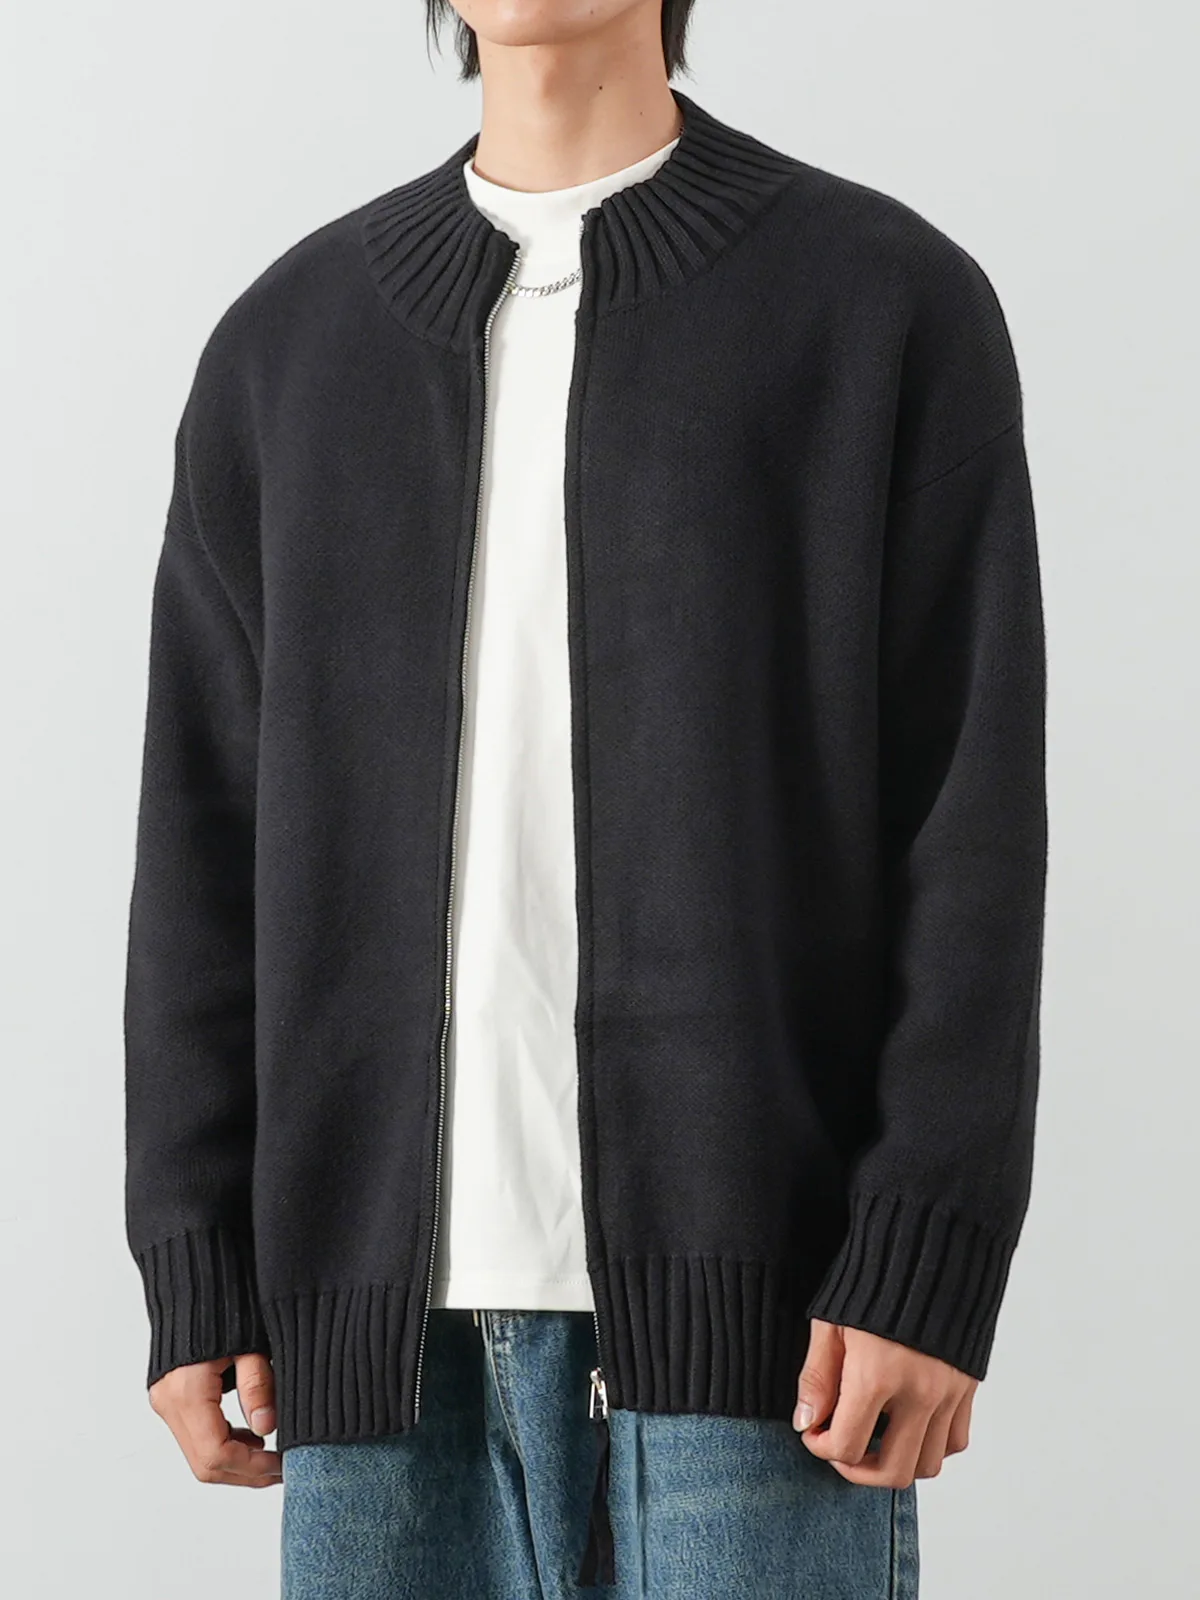 Men Solid Color Cardigan Sweaters Trendy Letter Print Oversize Zipper Knitwear Warm Coat